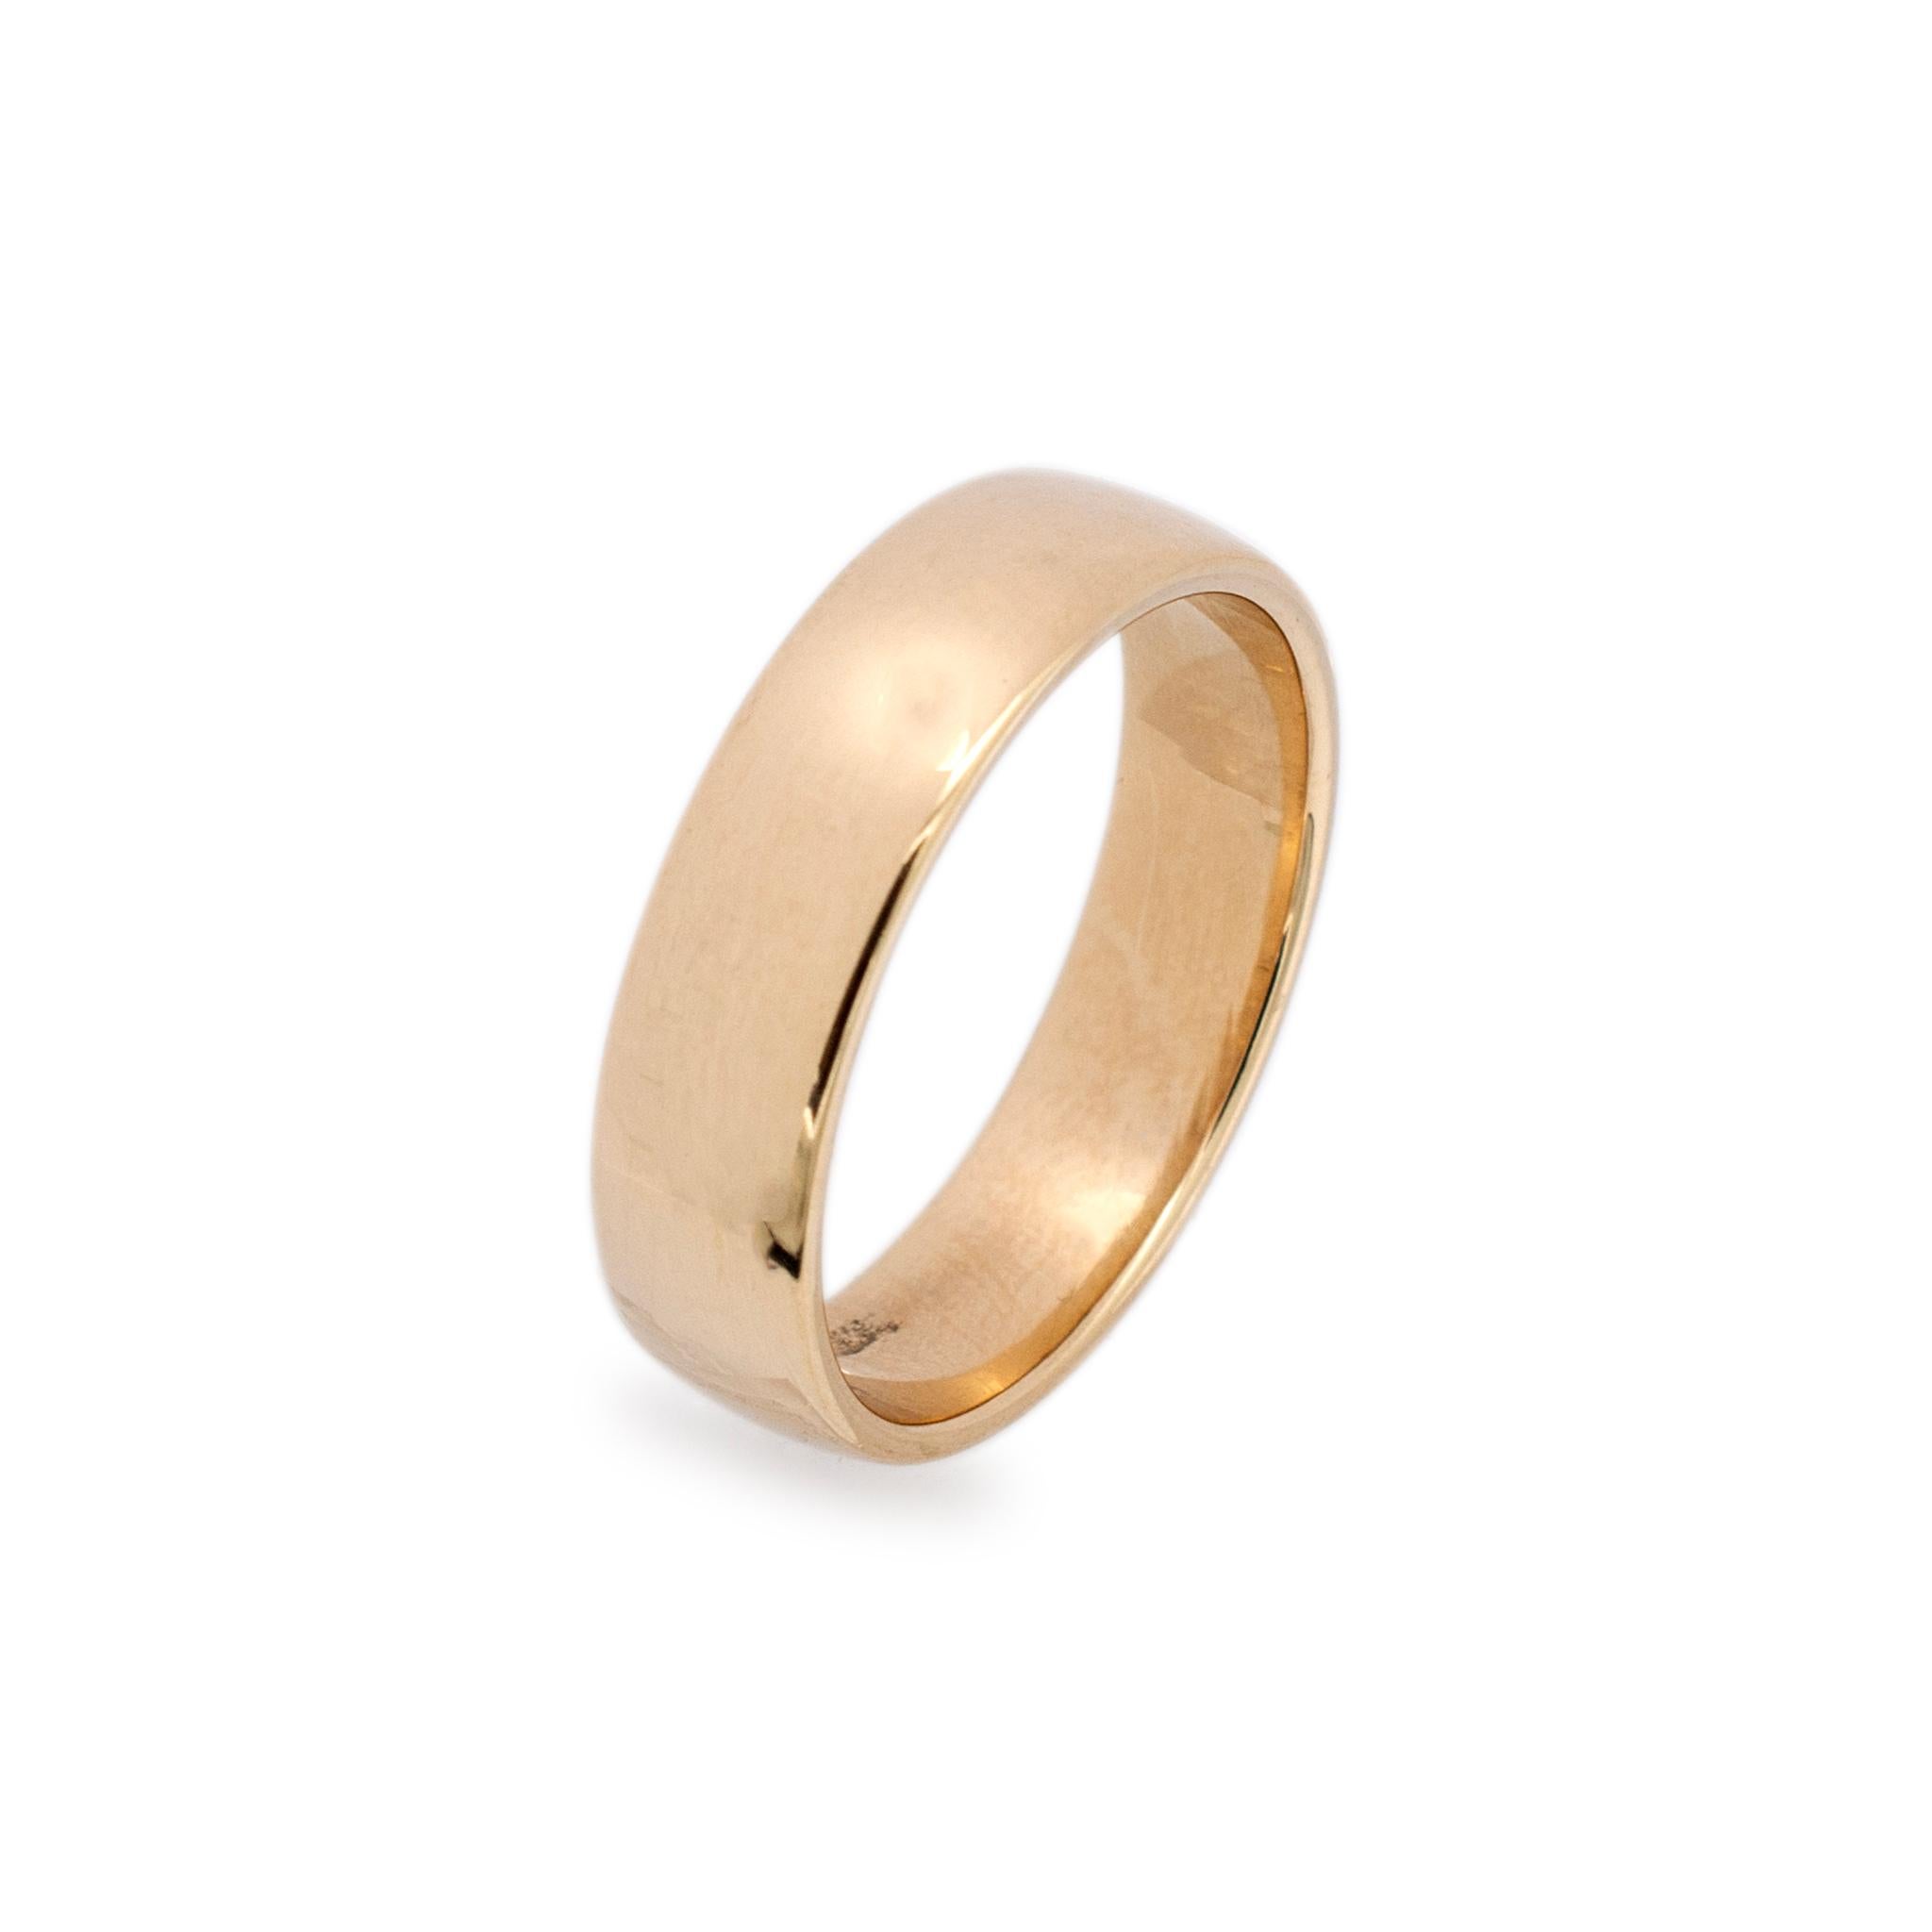 Brand: James Avery

Gender: Men's

Metal Type: 14K Yellow Gold

Size: 12.5

Shank Maximum Width: 6.30 mm

Weight: 9.40 grams

Mens 14K yellow gold comfort-fit wedding ring.  Stamped 